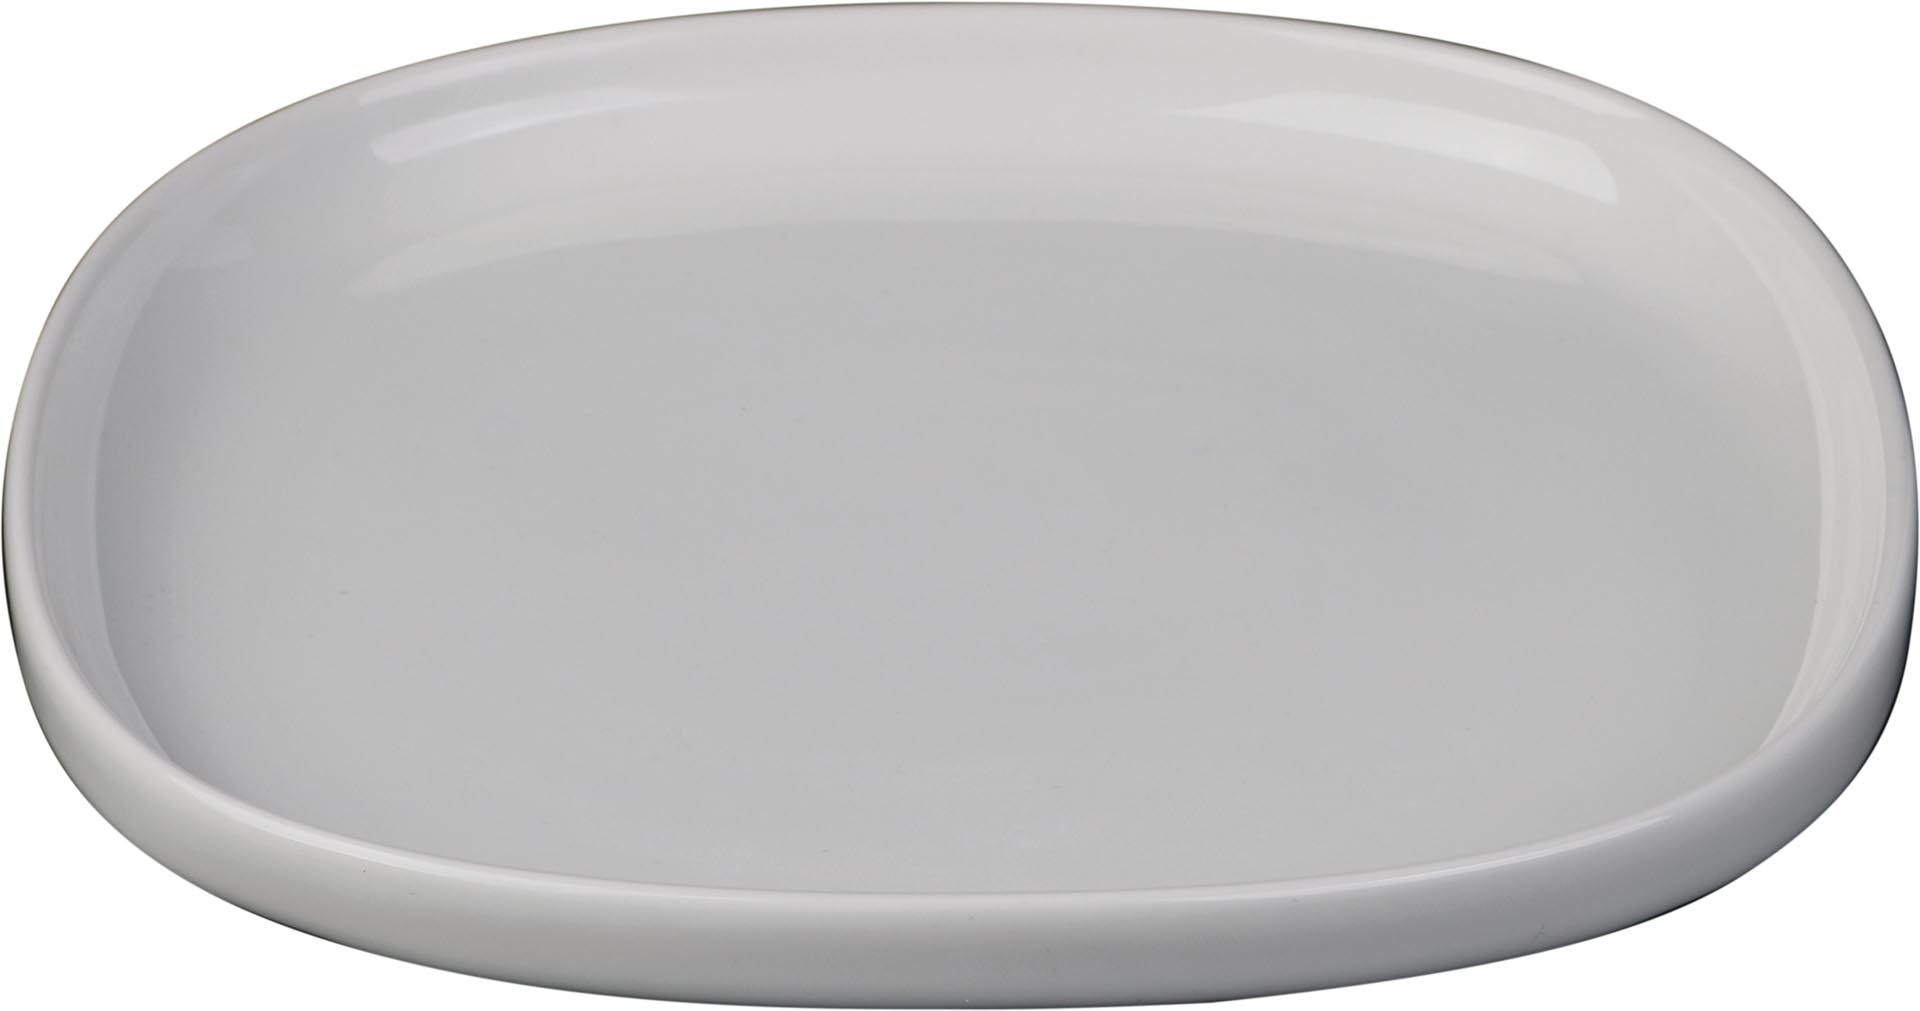 Porzellanserie "Skagen" High Alumina  Teller 24,0 cm, weiß